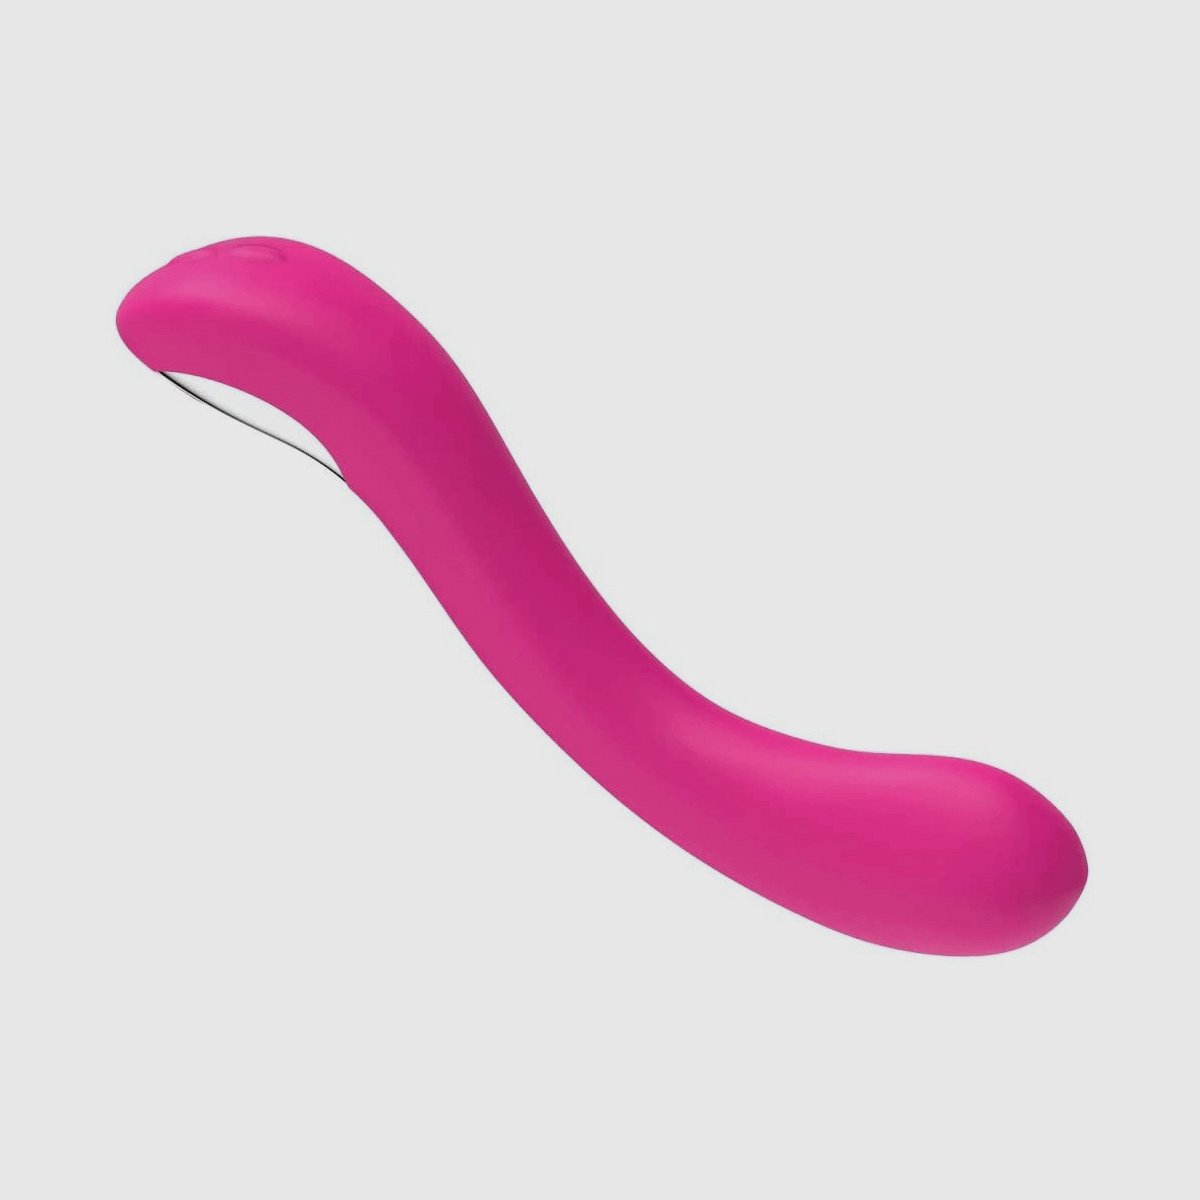 Lovense Osci 2 Bluetooth G-Spot Vibrator - Pink - Thorn & Feather